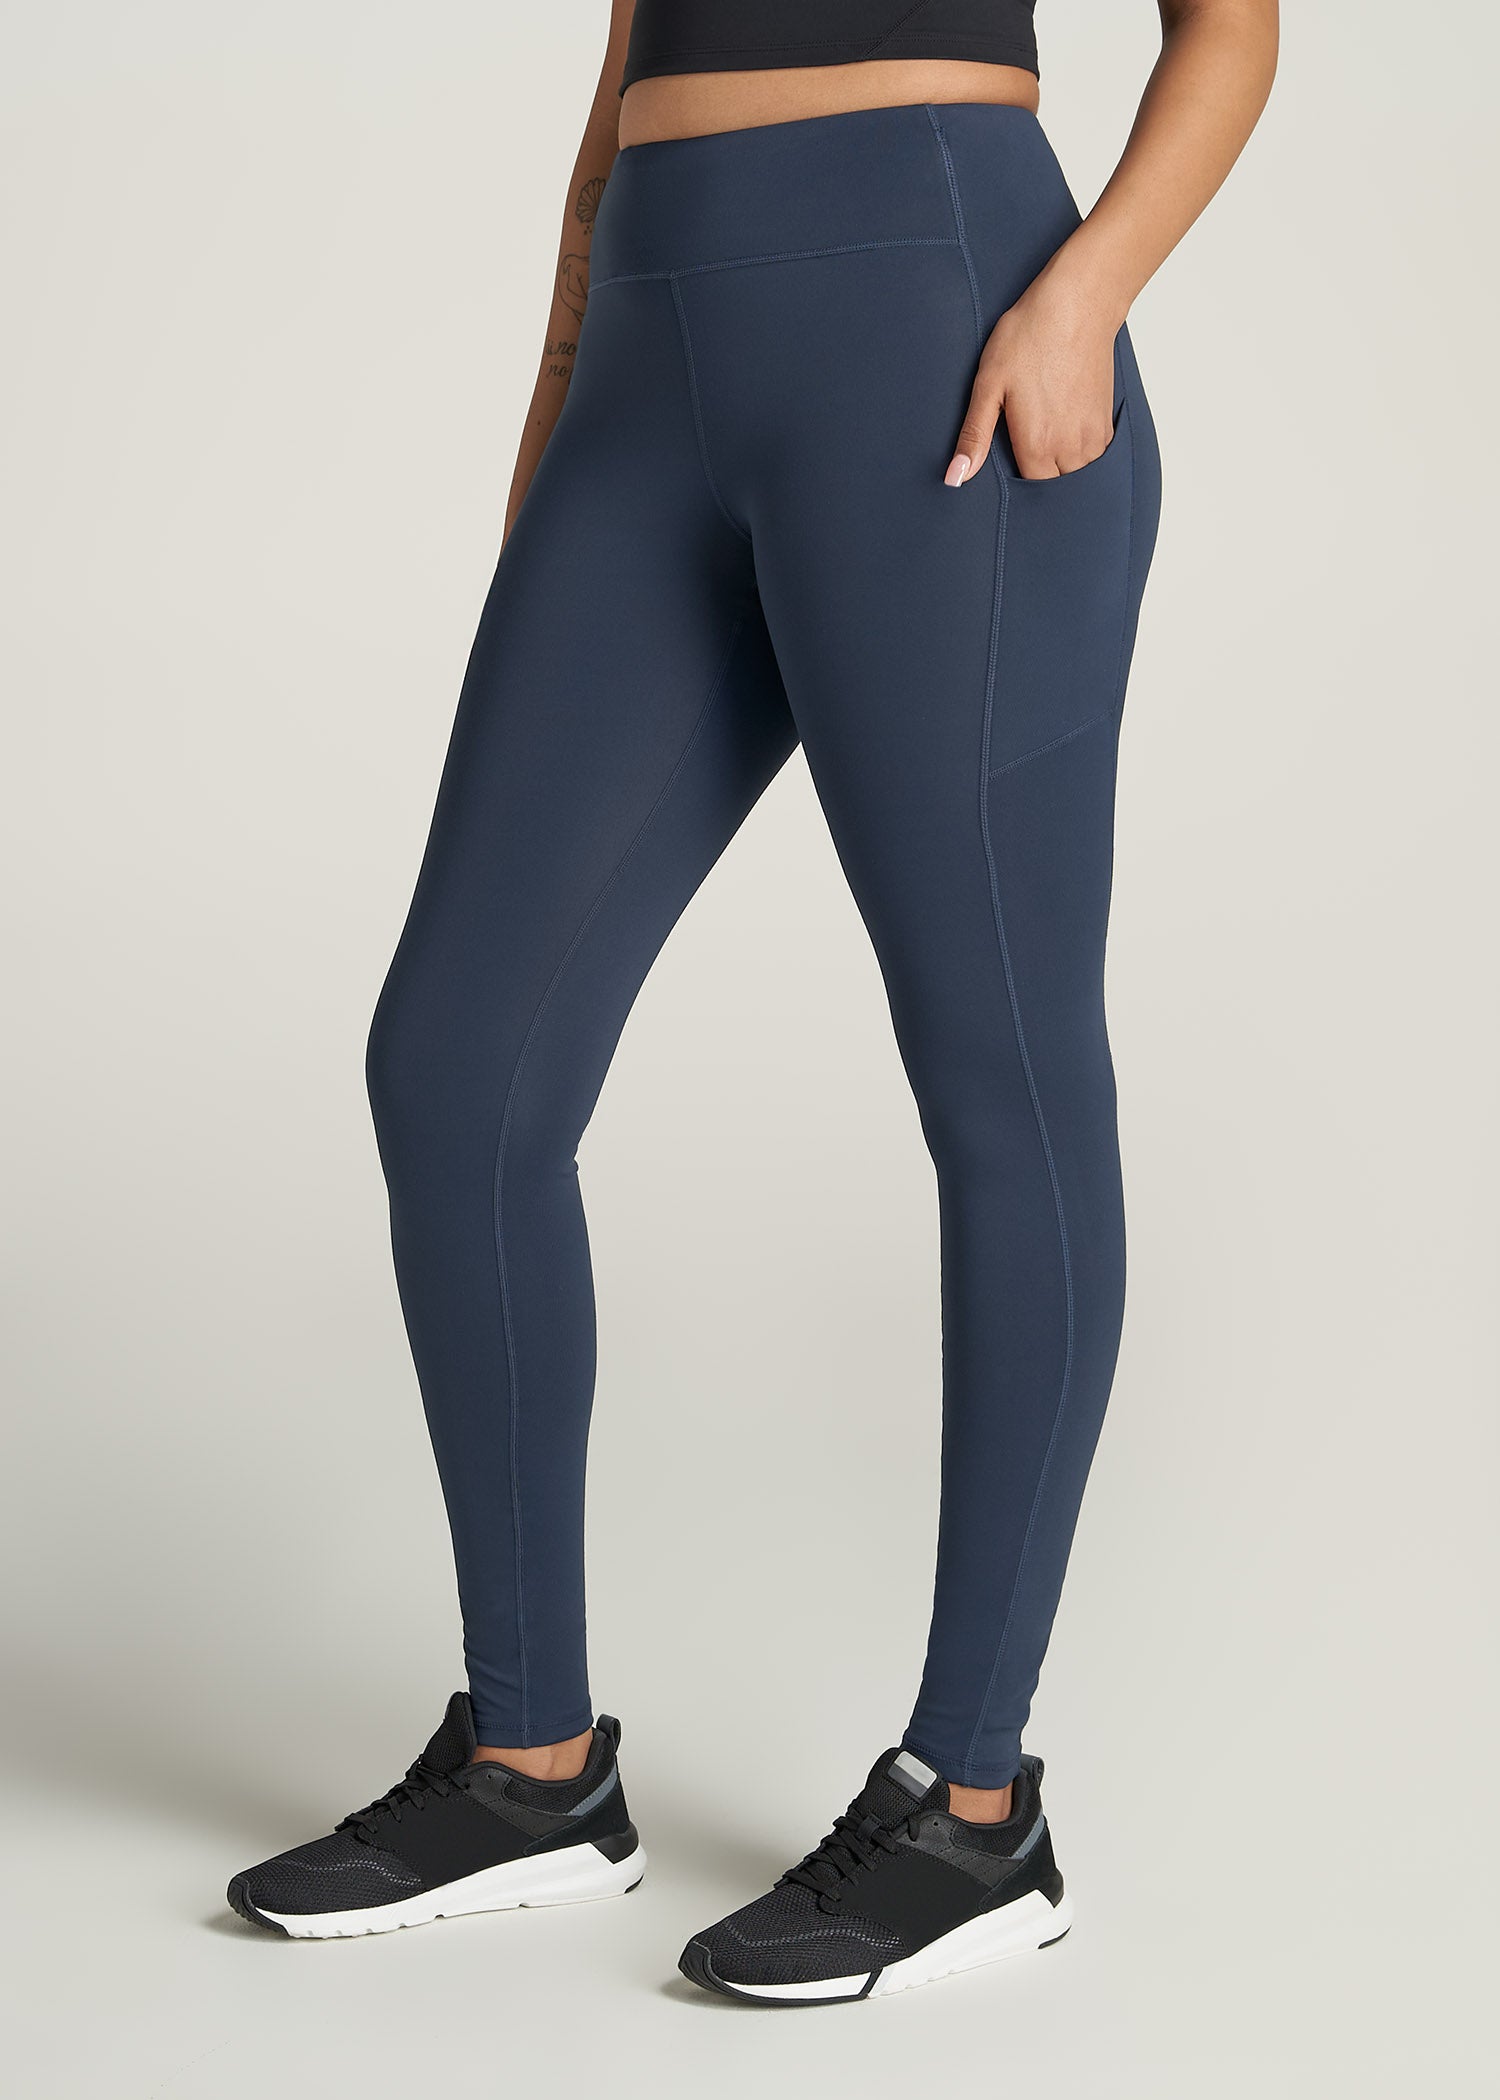 VOGO Athletica Navy Blue Active Pants Size XL - 65% off